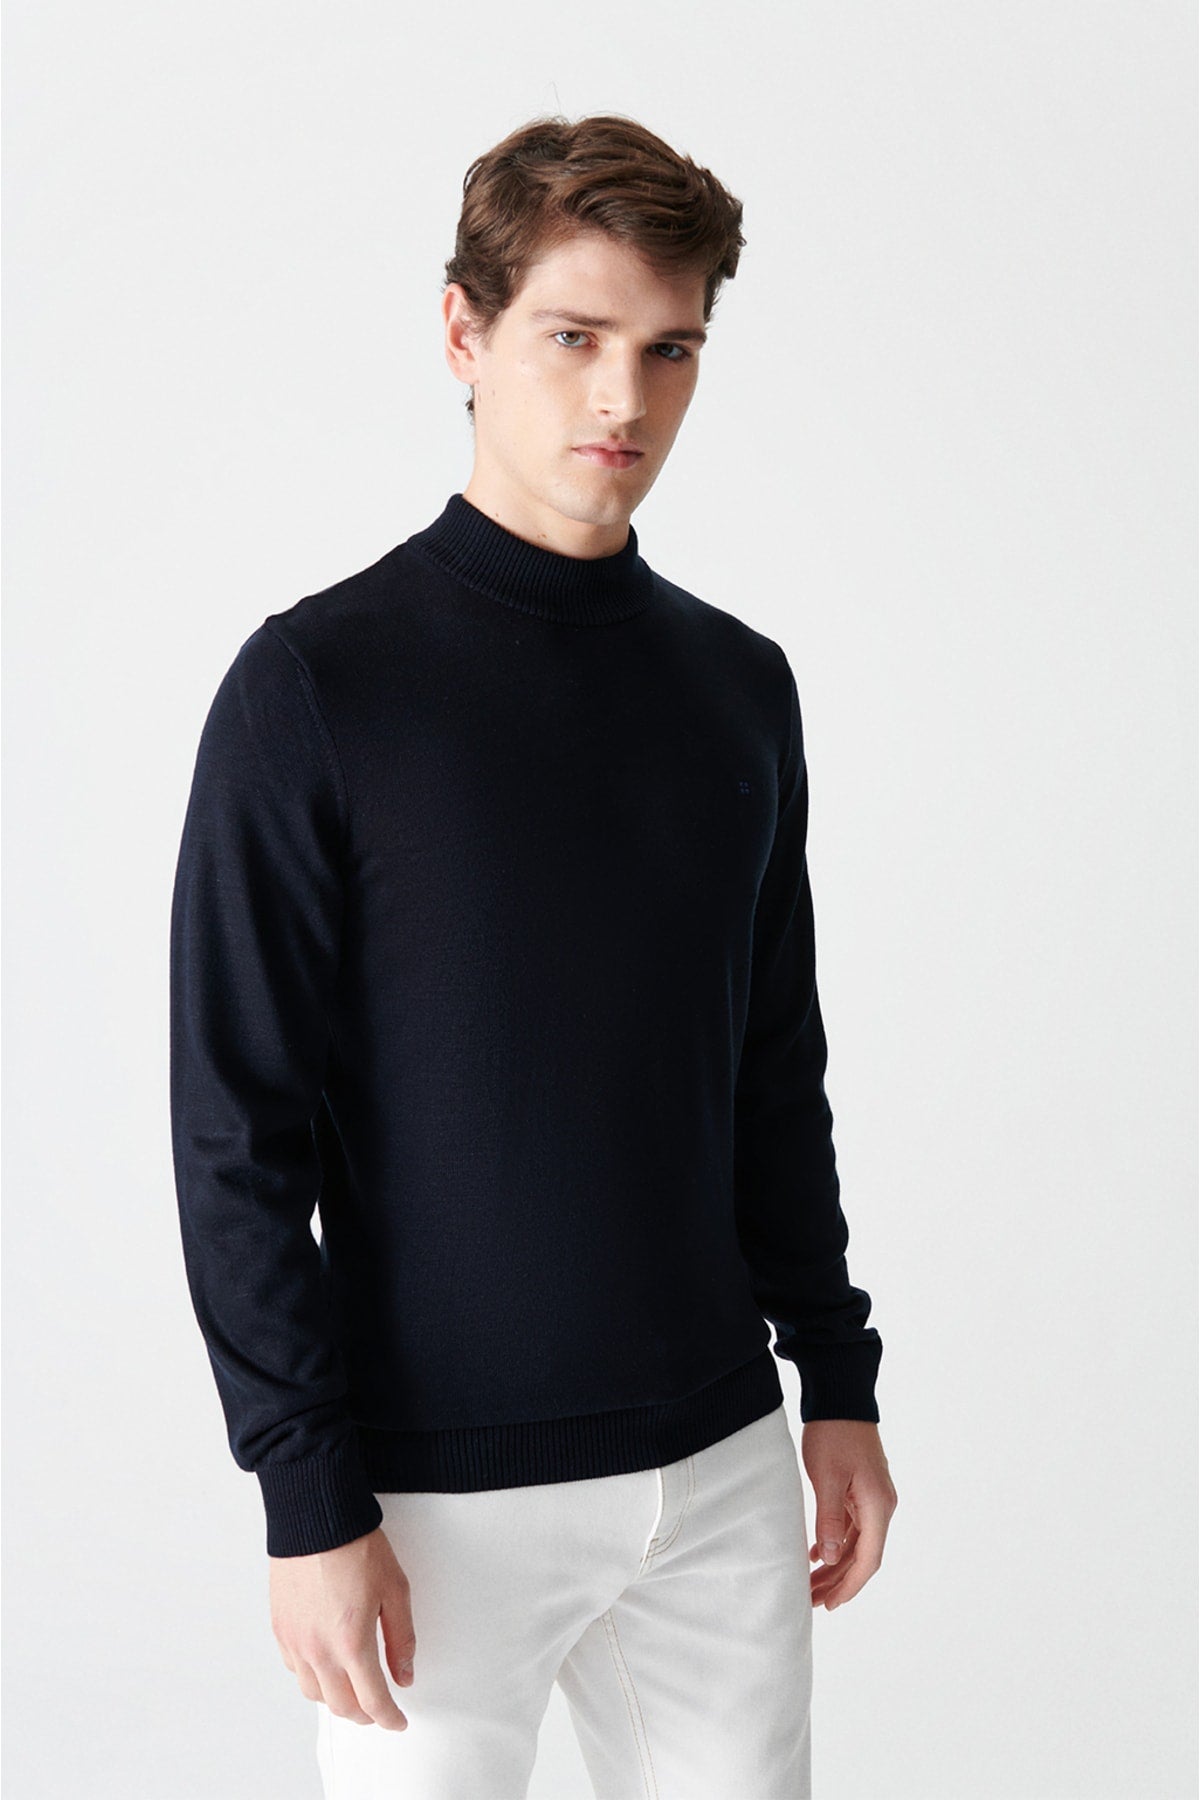 Unisex navy blue half -fisherman collar feathered knitwear sweater E005001